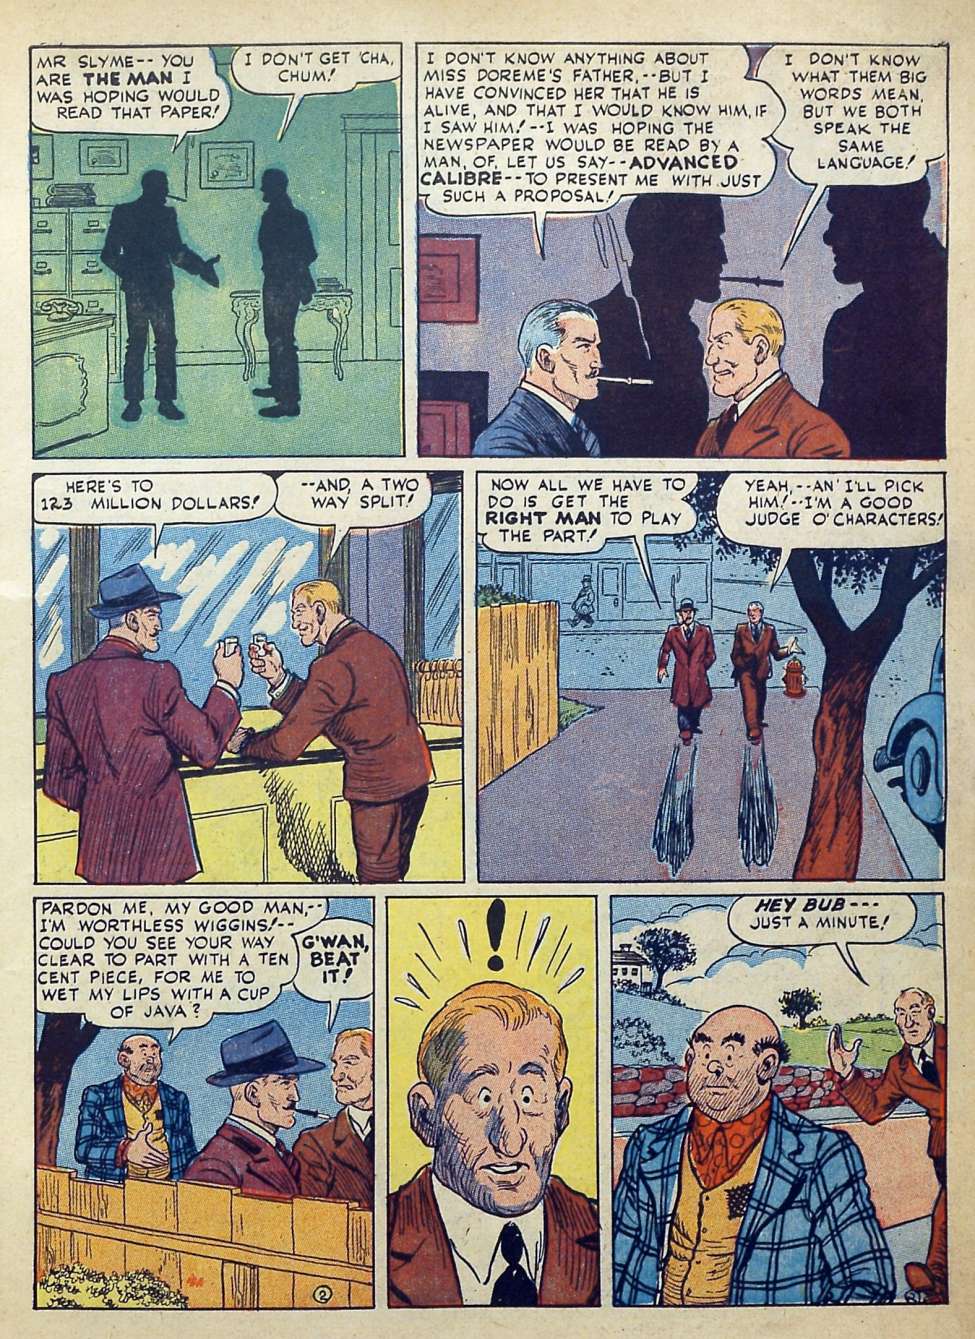 Suspense Comics #3 from 1944 1 Nazi comic